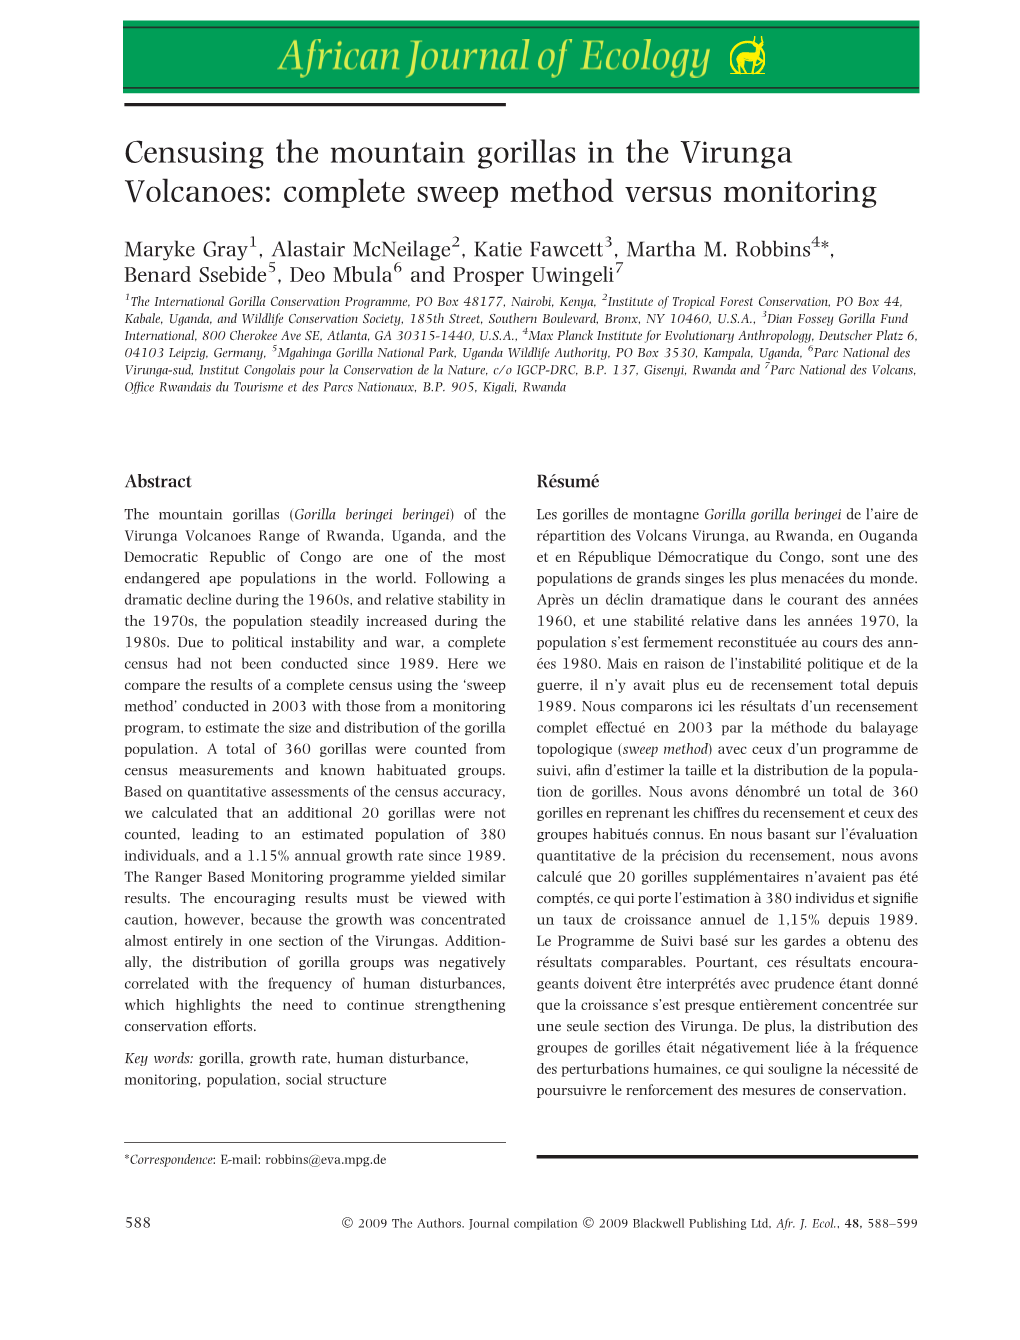 Censusing the Mountain Gorillas in the Virunga Volcanoes: Complete Sweep Method Versus Monitoring